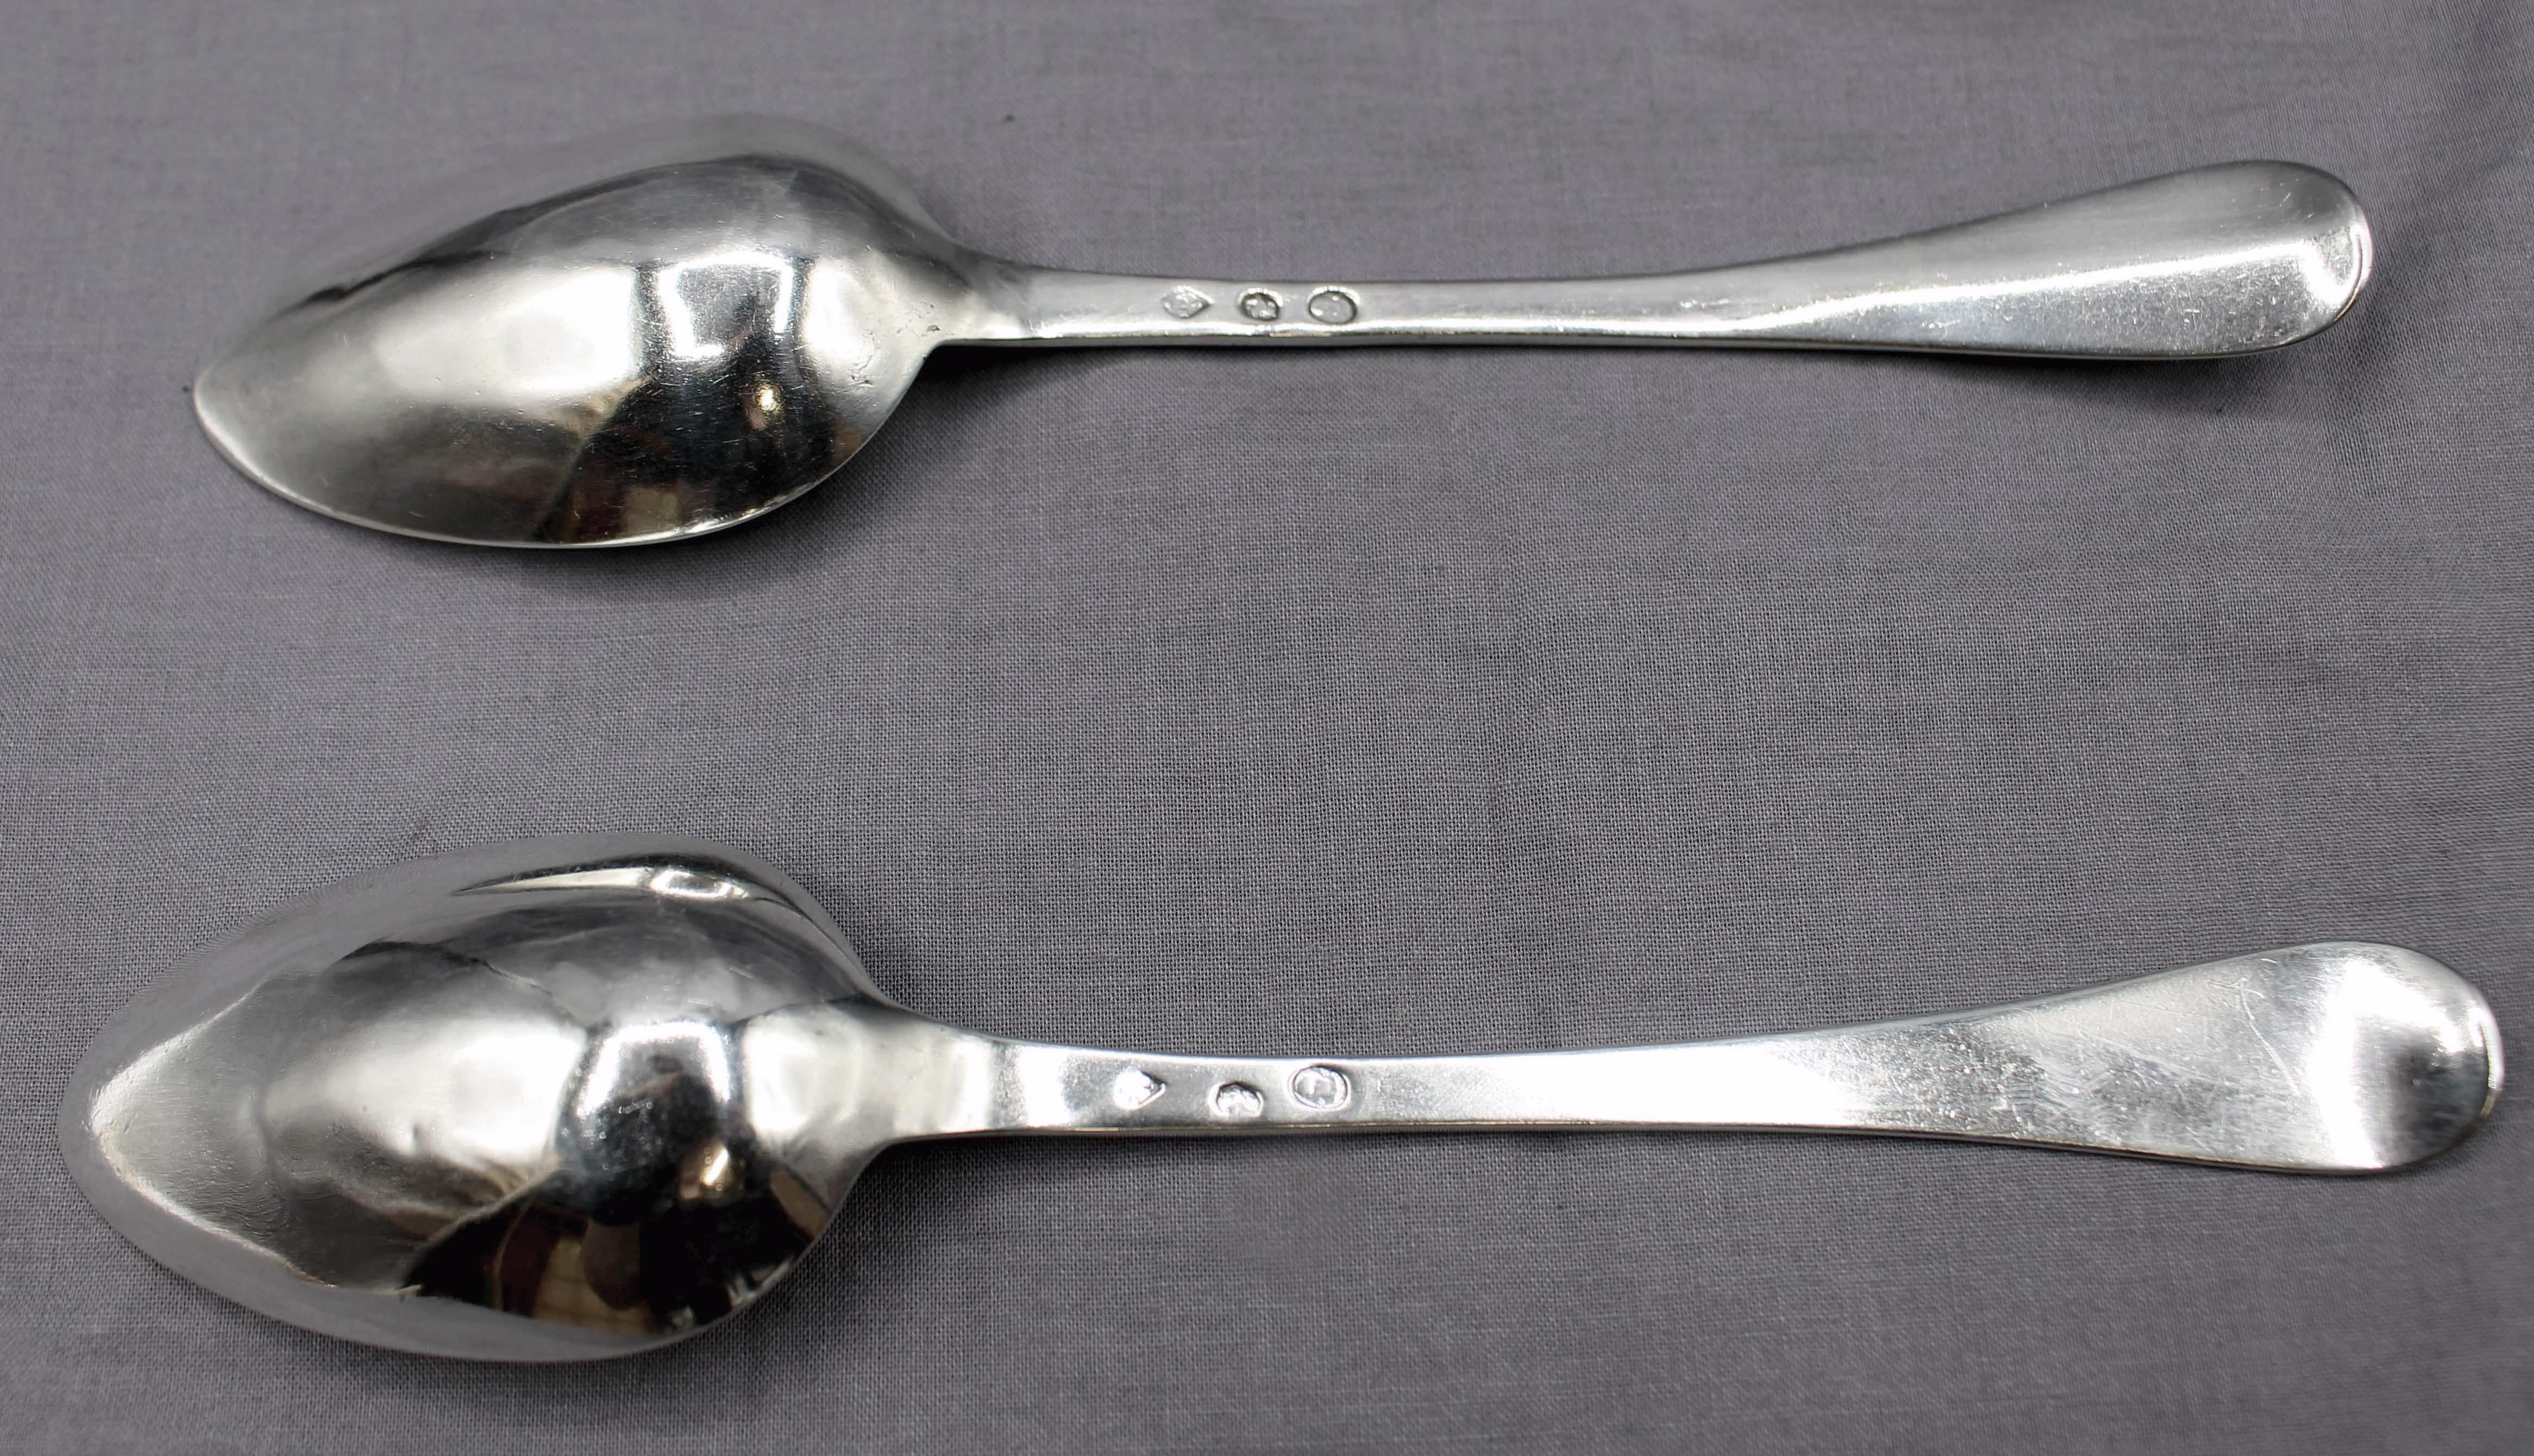 1798-1809 pair of silver serving spoons, Paris France. 950 standard silver. Mark of N.A. Lion crests. In the English taste. Provenance: William Walker Antiques, Atlanta, GA. 3.55 troy oz.
8